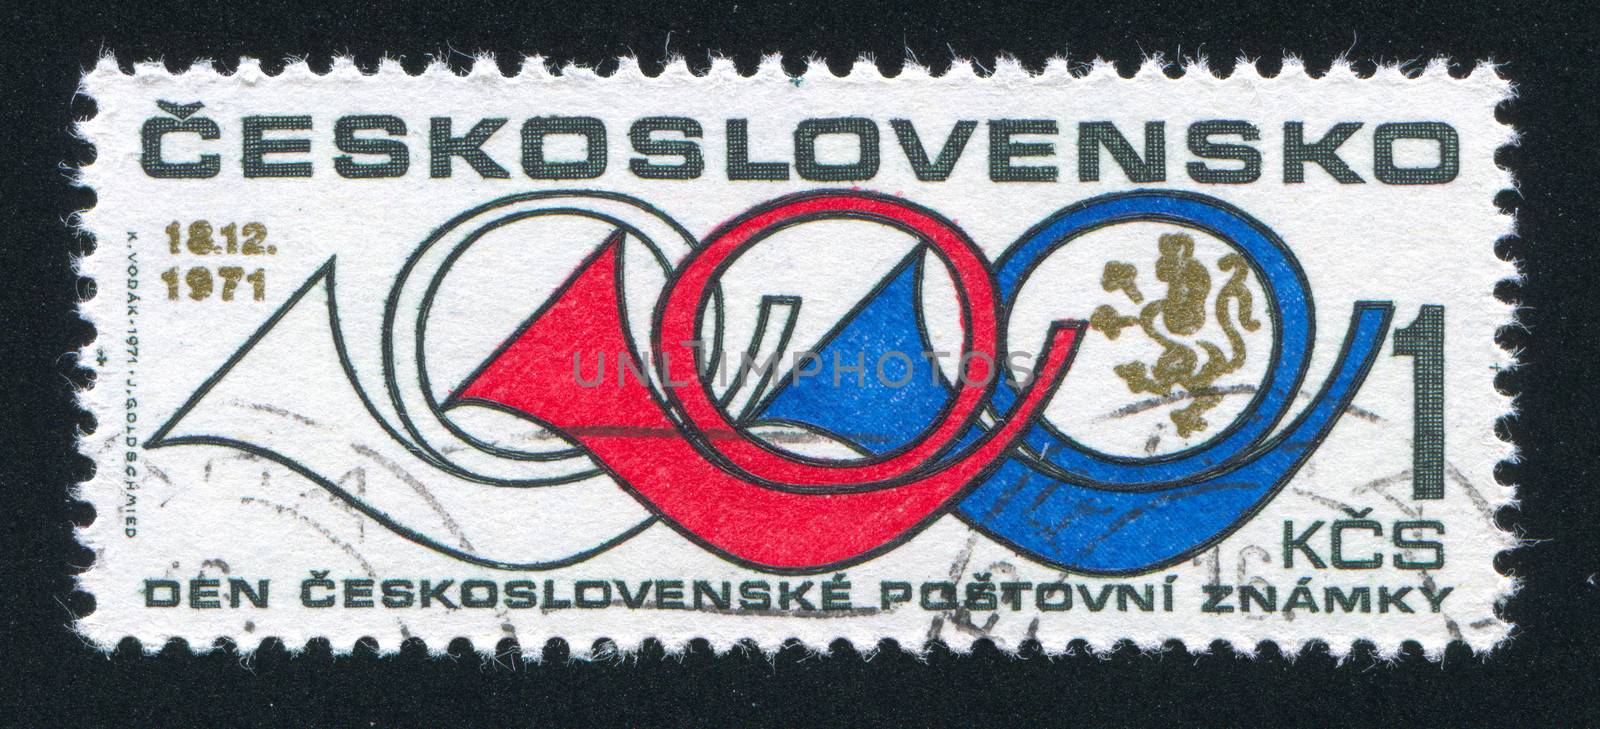 CZECHOSLOVAKIA - CIRCA 1971: stamp printed by Czechoslovakia, shows Post Horns and Lion, circa 1971